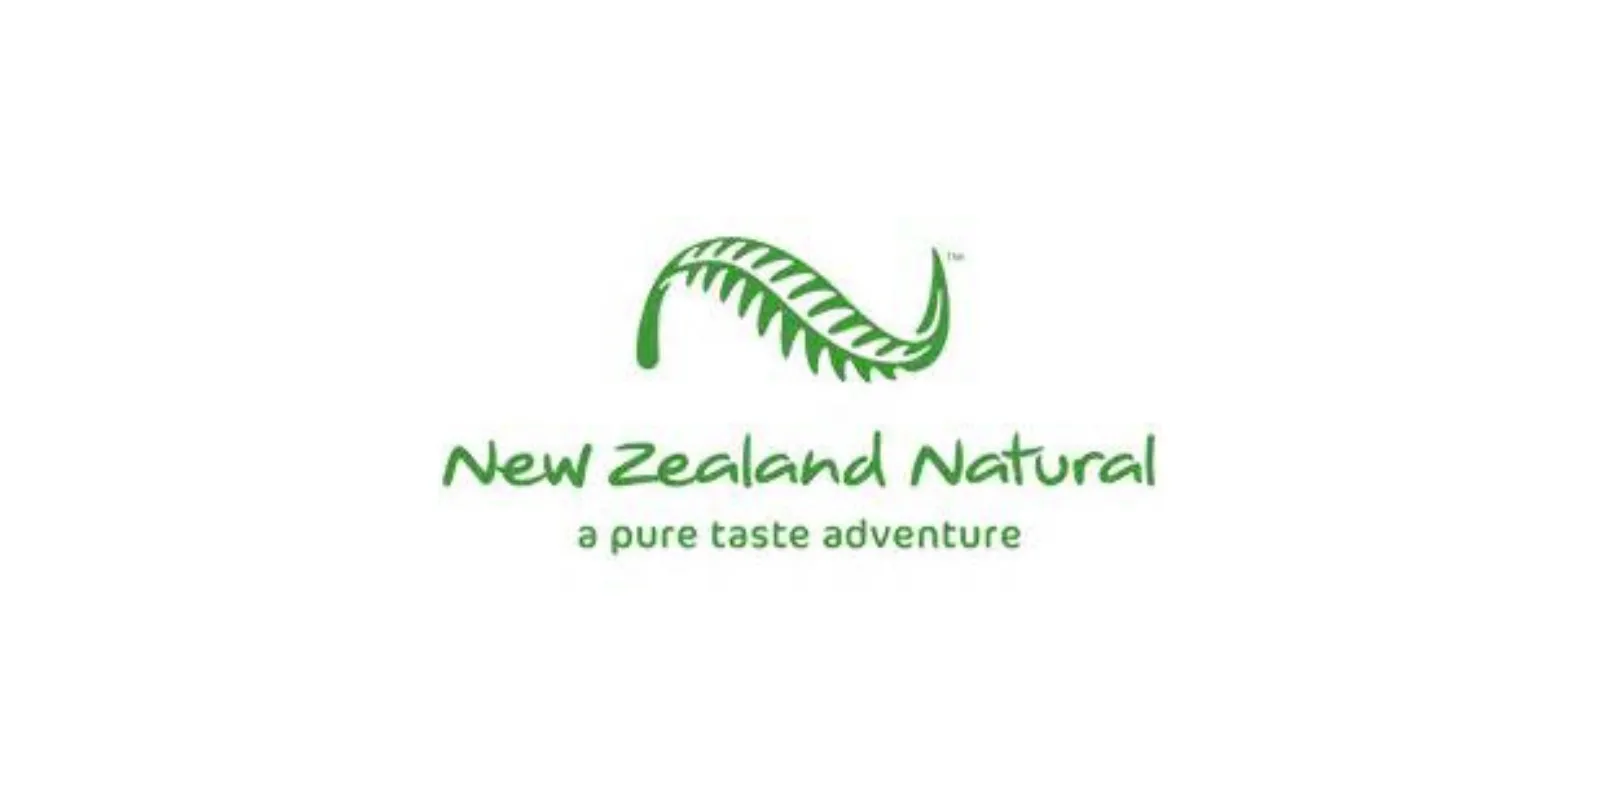 New Zealand Natural menu prices in australia